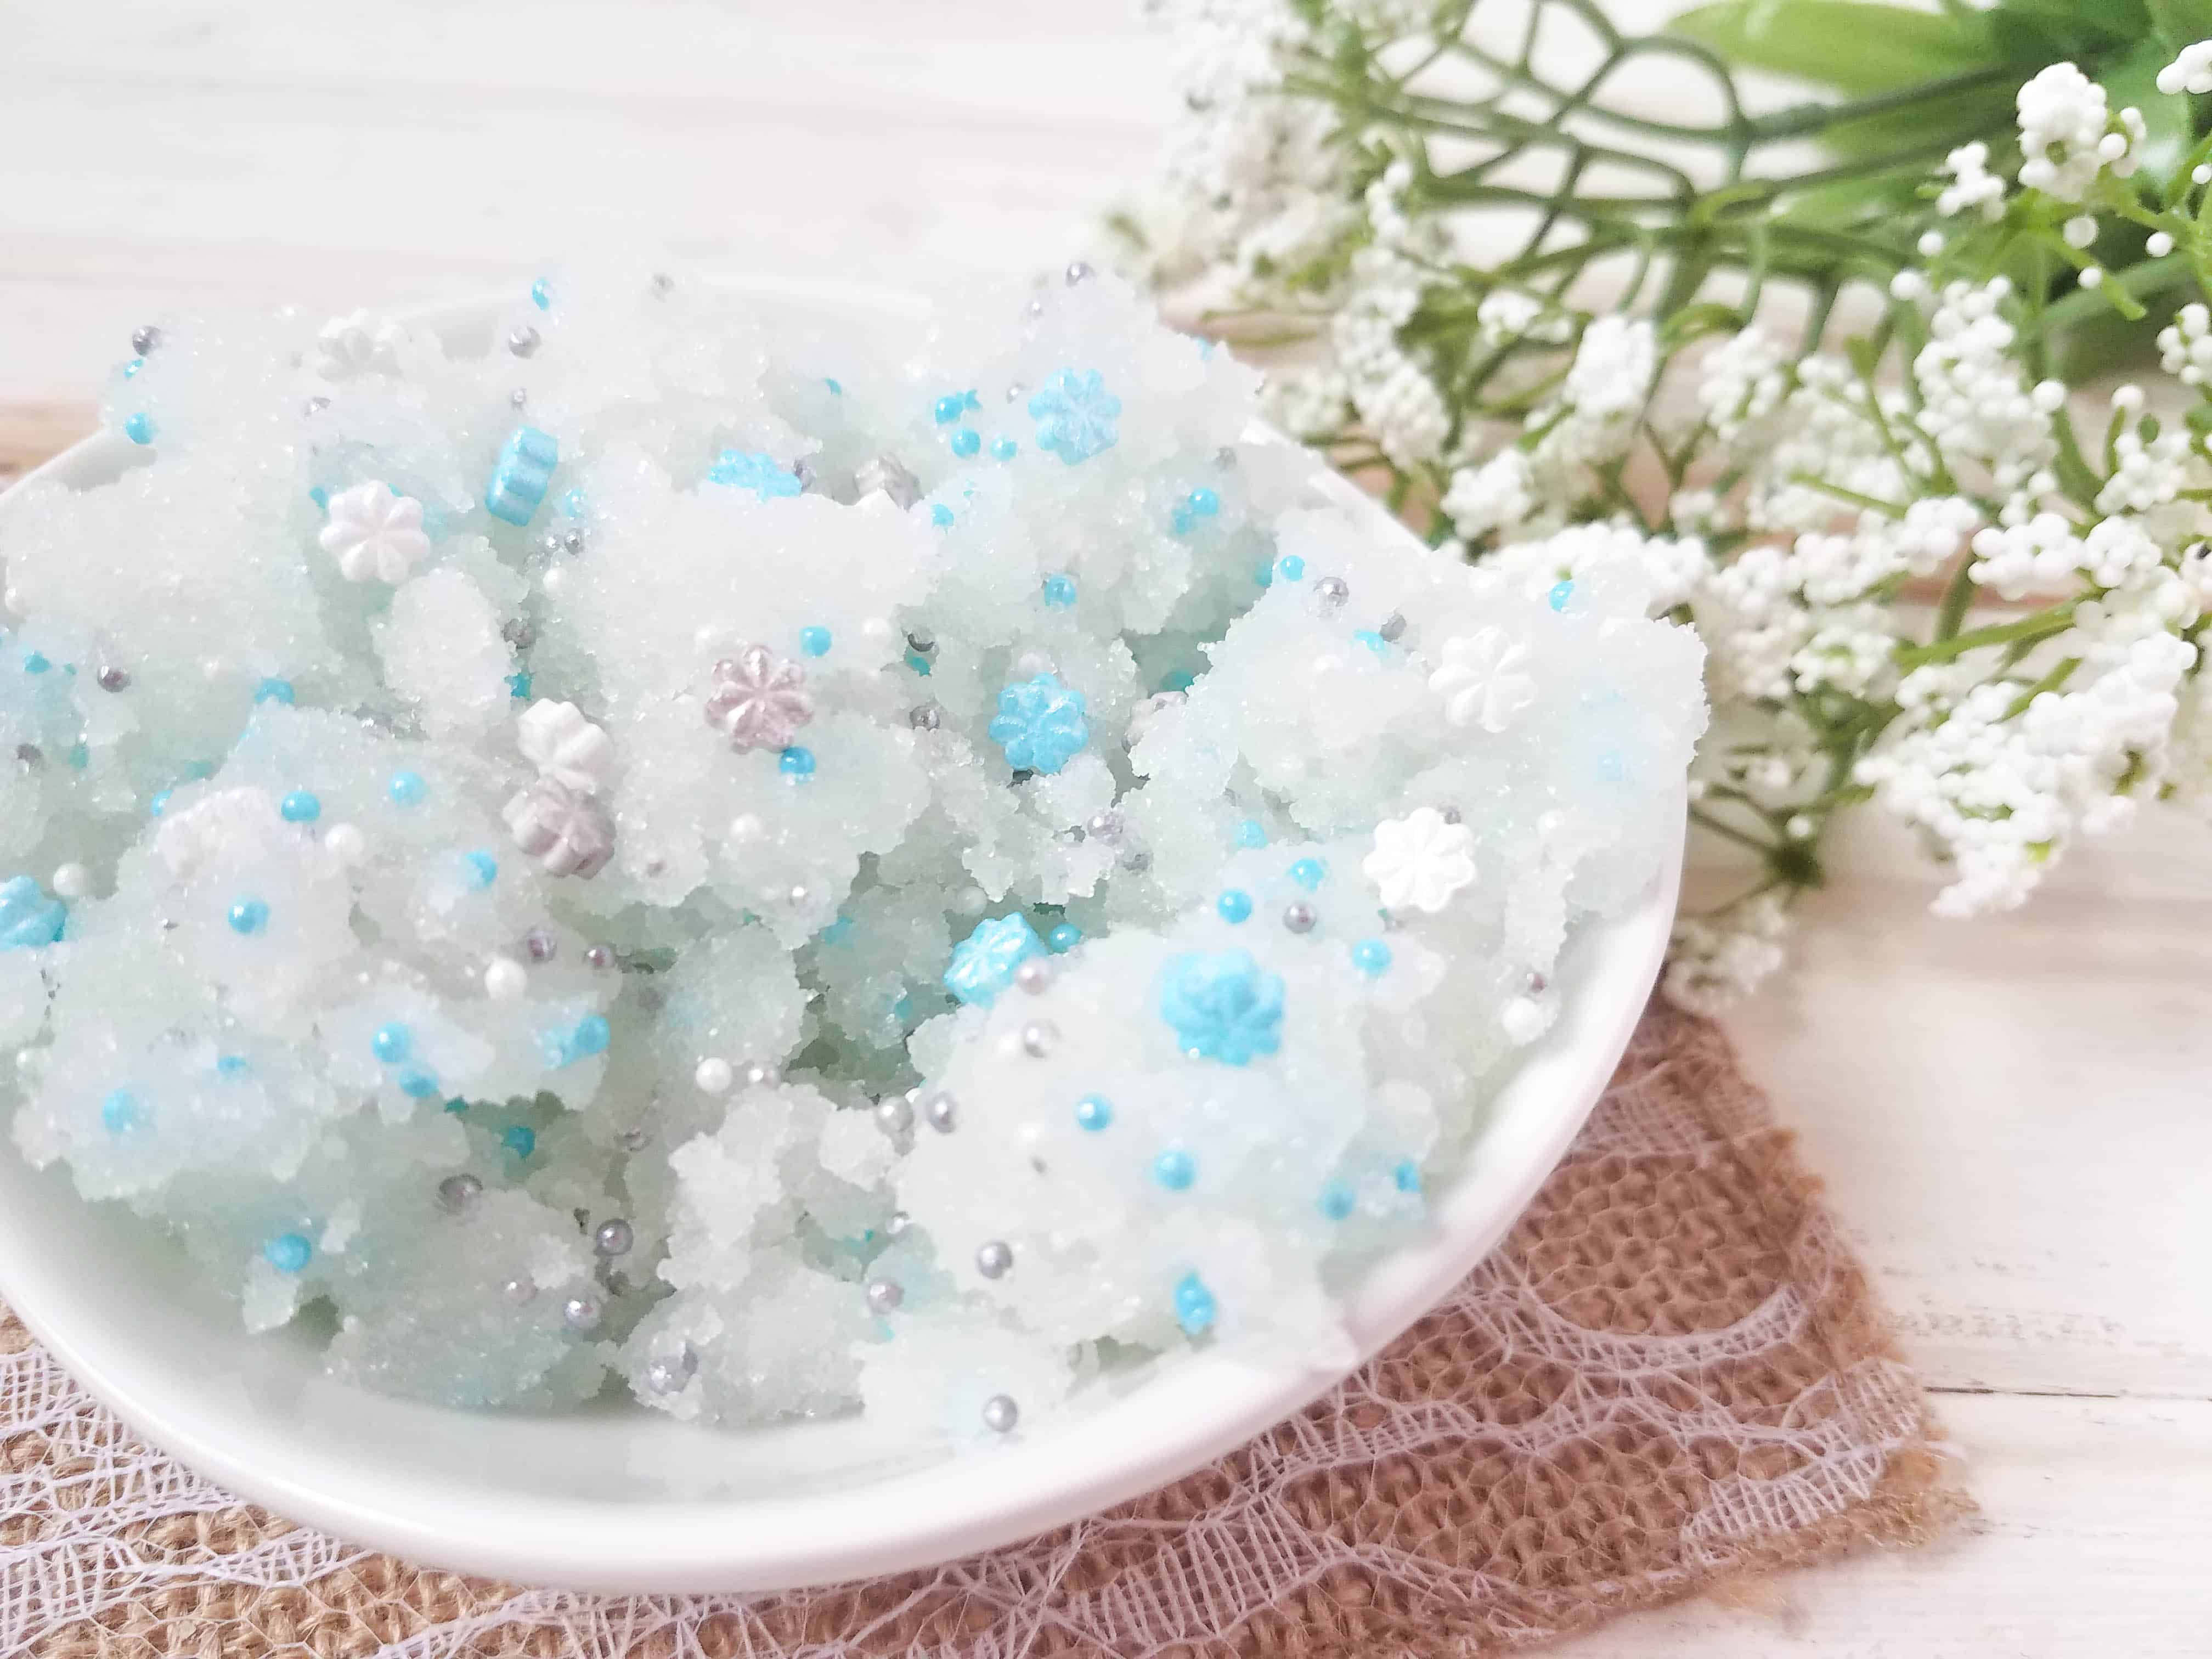 How to make a Frozen-inspired sugar scrub